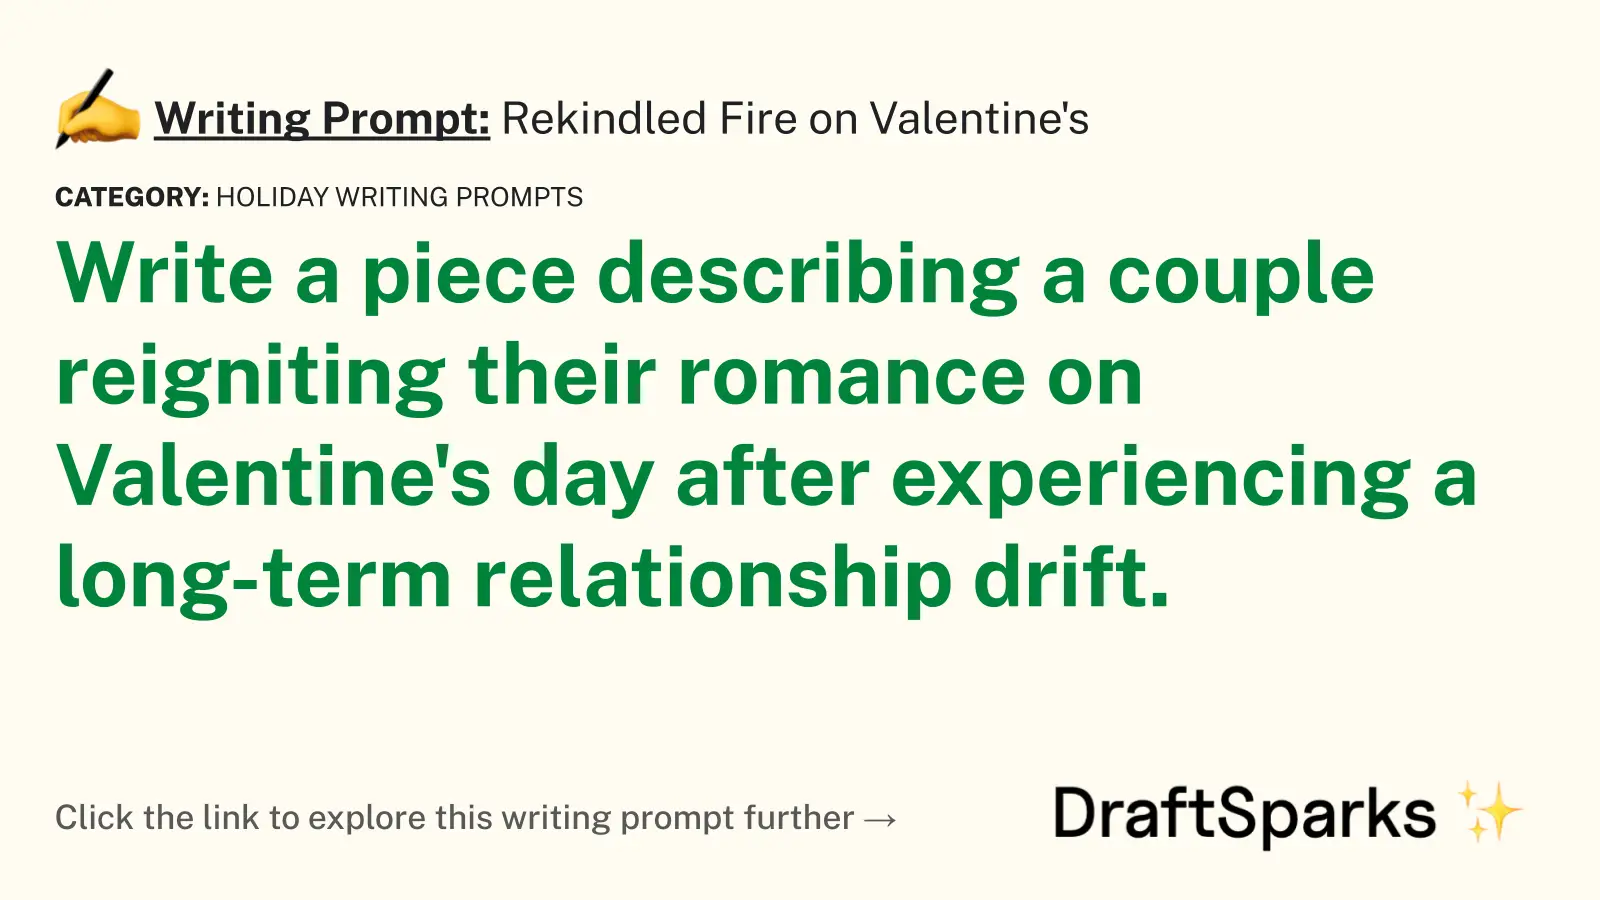 Rekindled Fire on Valentine’s